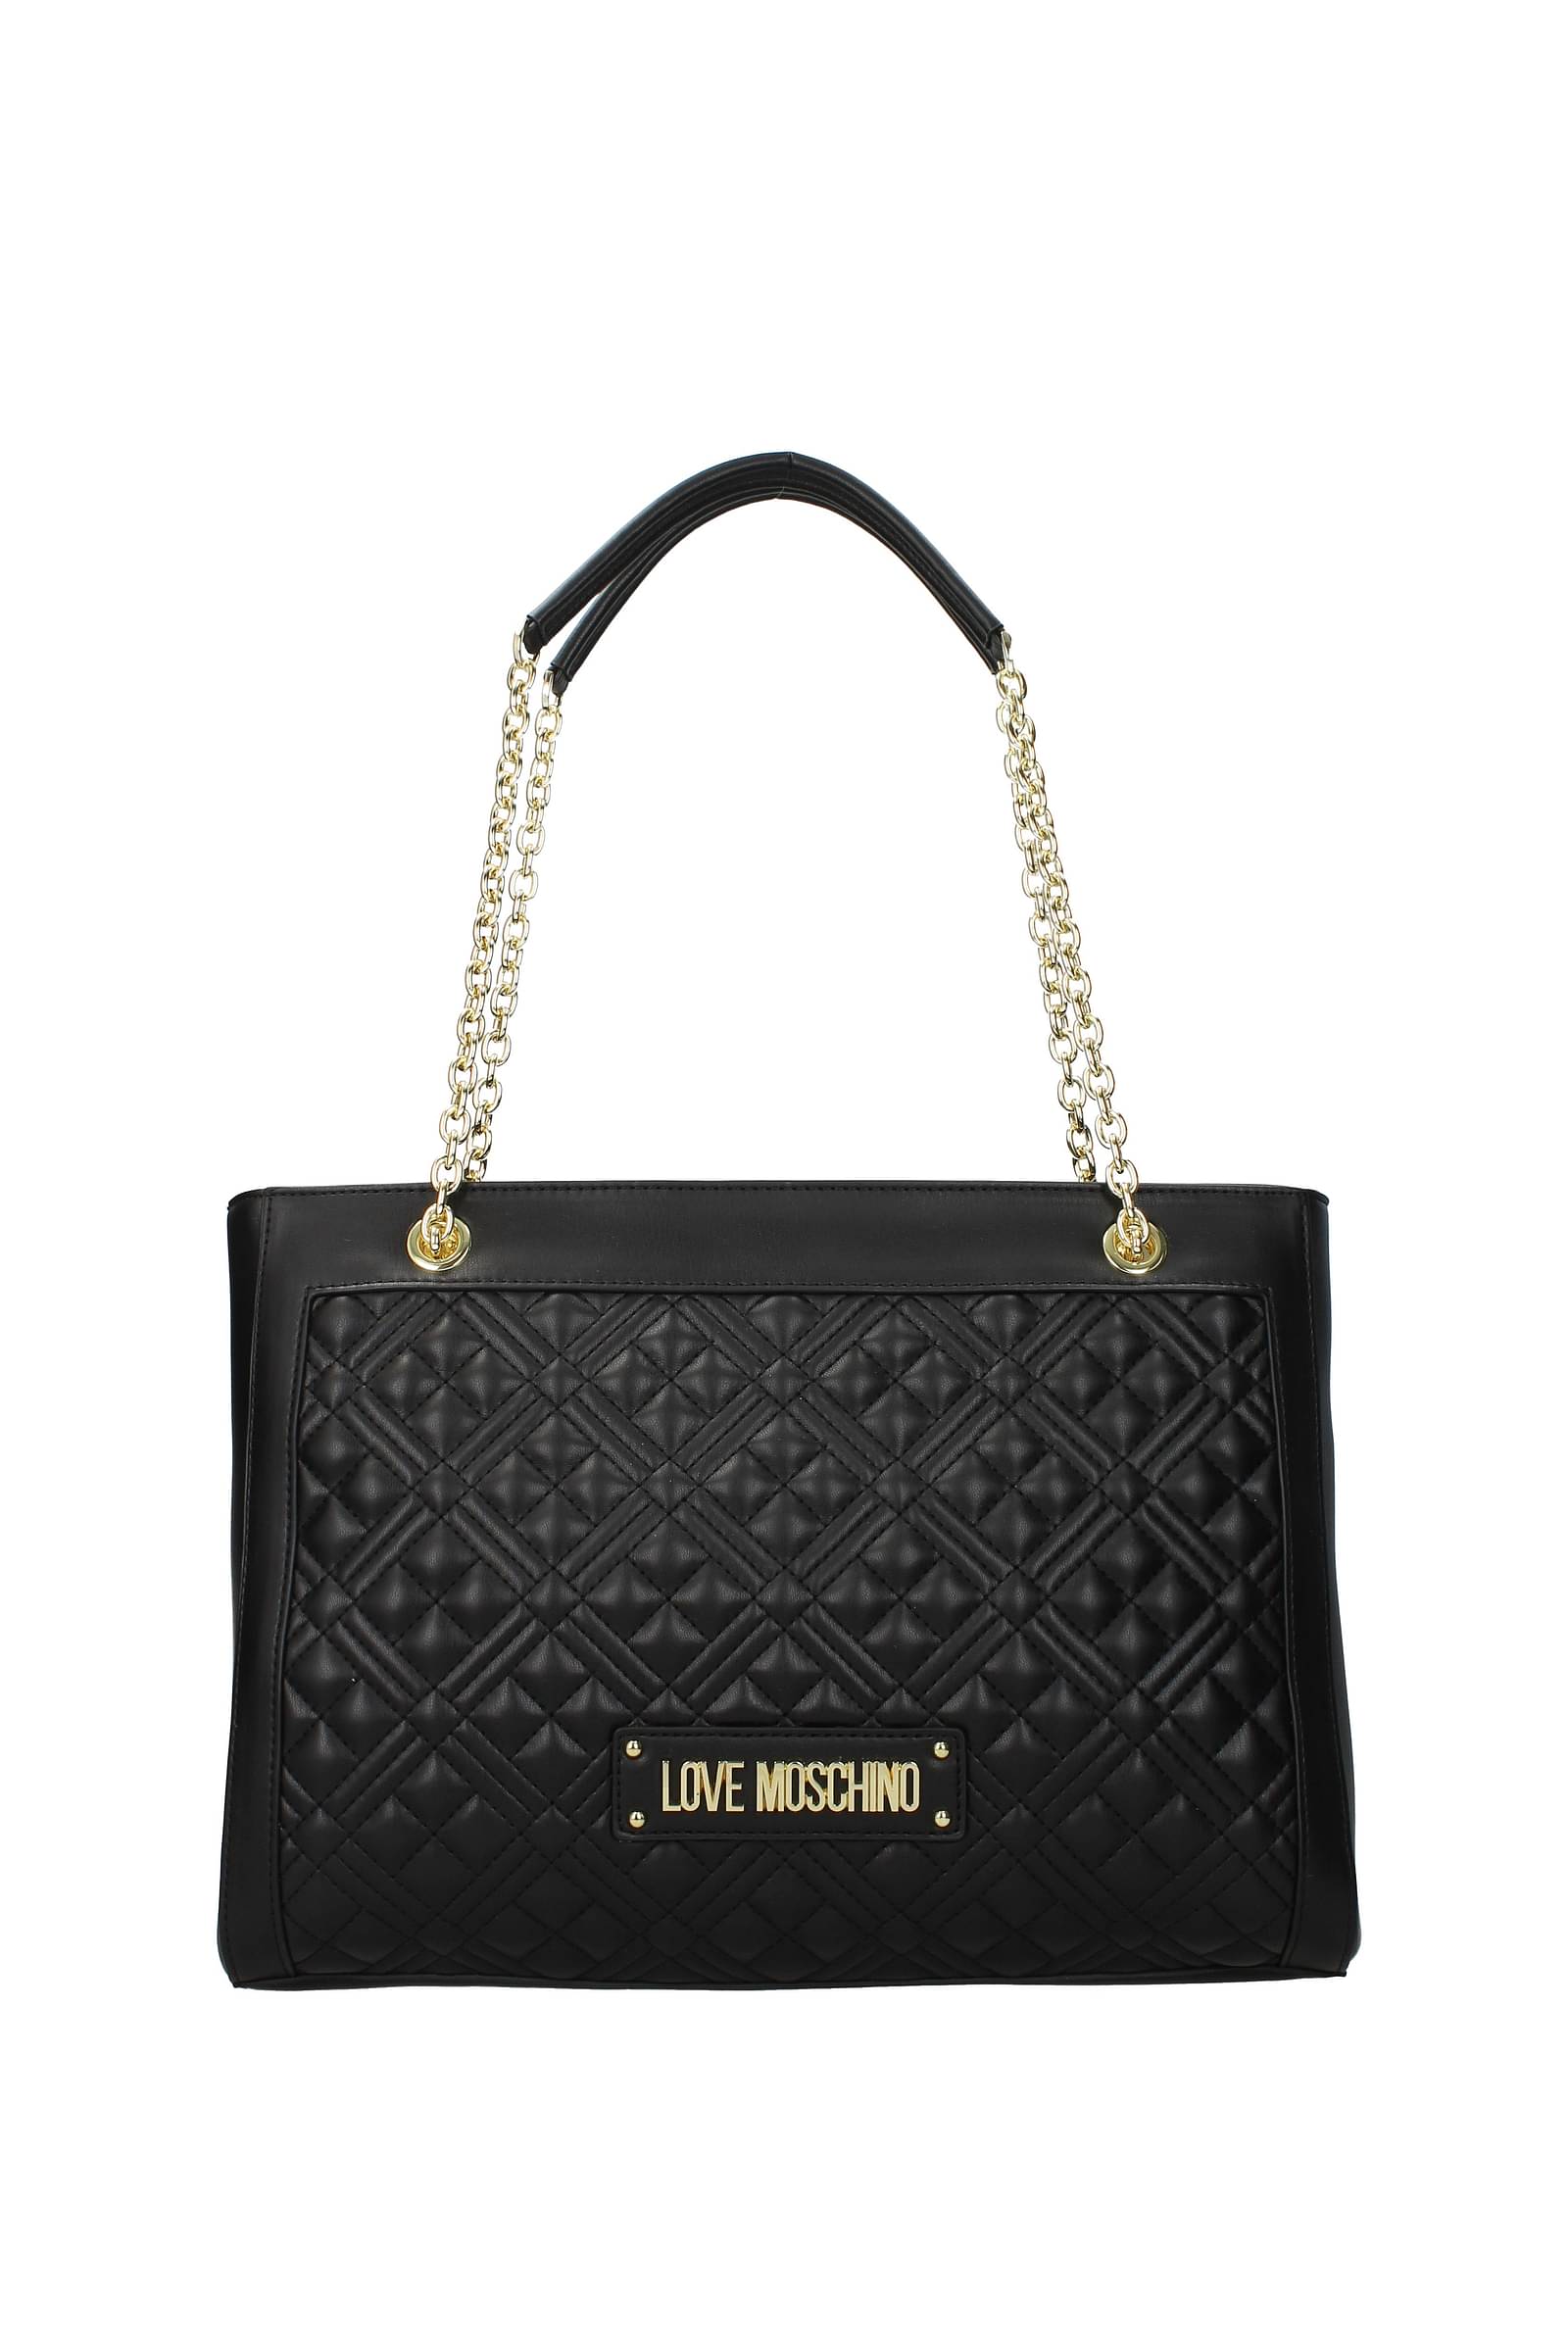 Moschino Love Shoulder Bag Satchel Beige Nylon New 